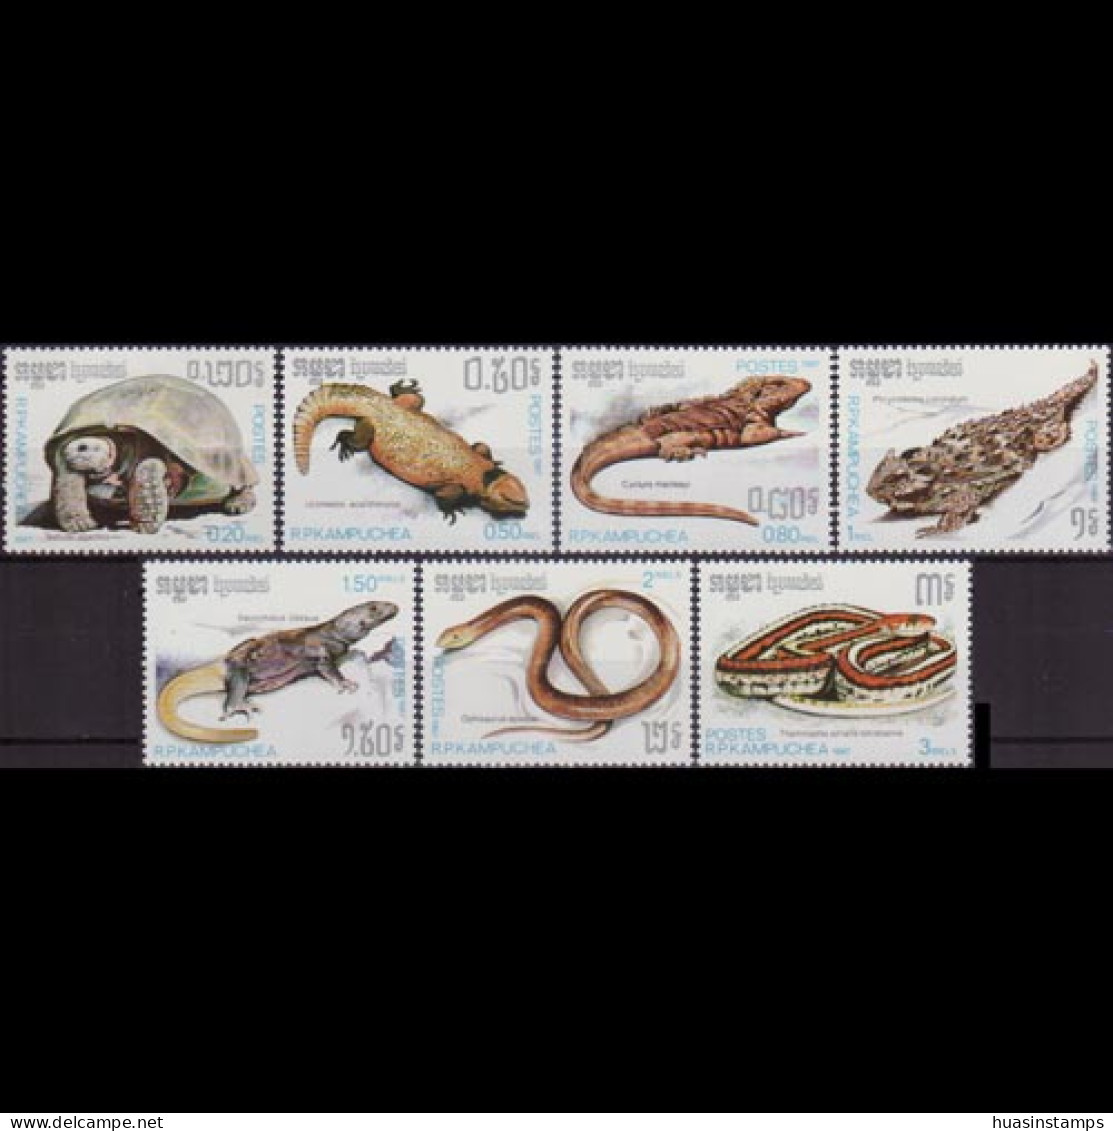 CAMBODIA 1987 - Scott# 805-11 Reptiles Set Of 7 MNH - Cambodja